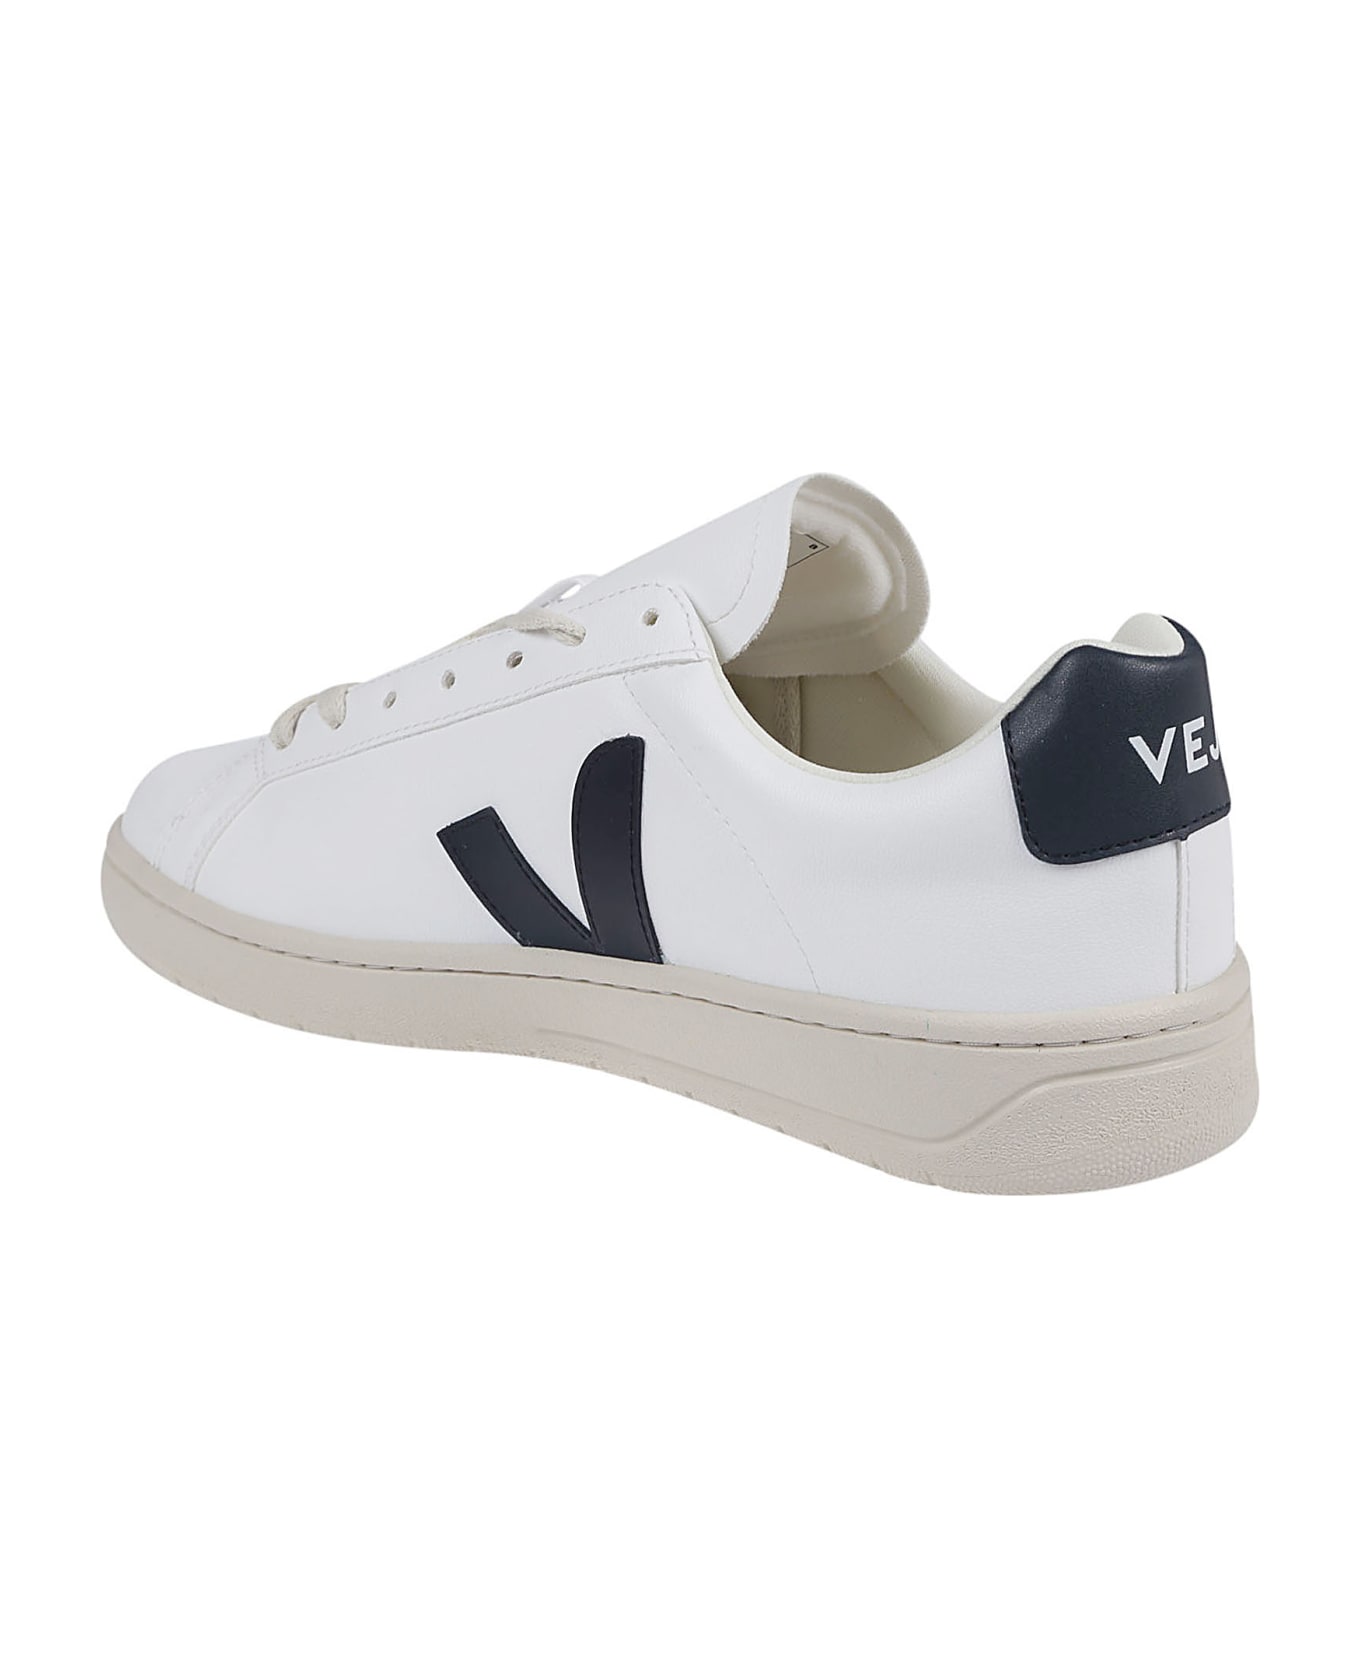 Veja Urca Sneakers - White/nautico